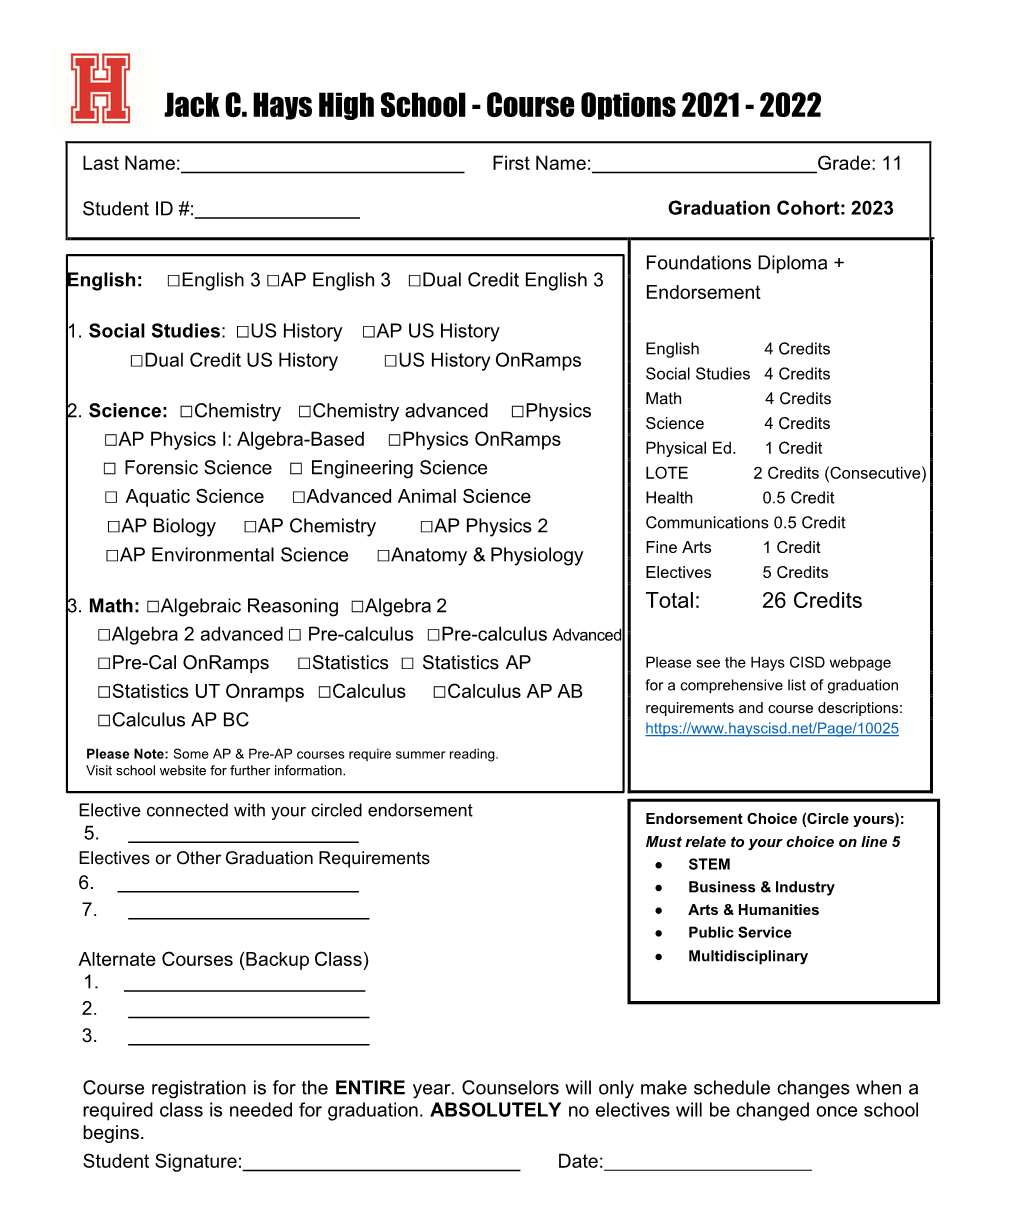 Jack C. Hays High School - Course Options 2021 - 2022